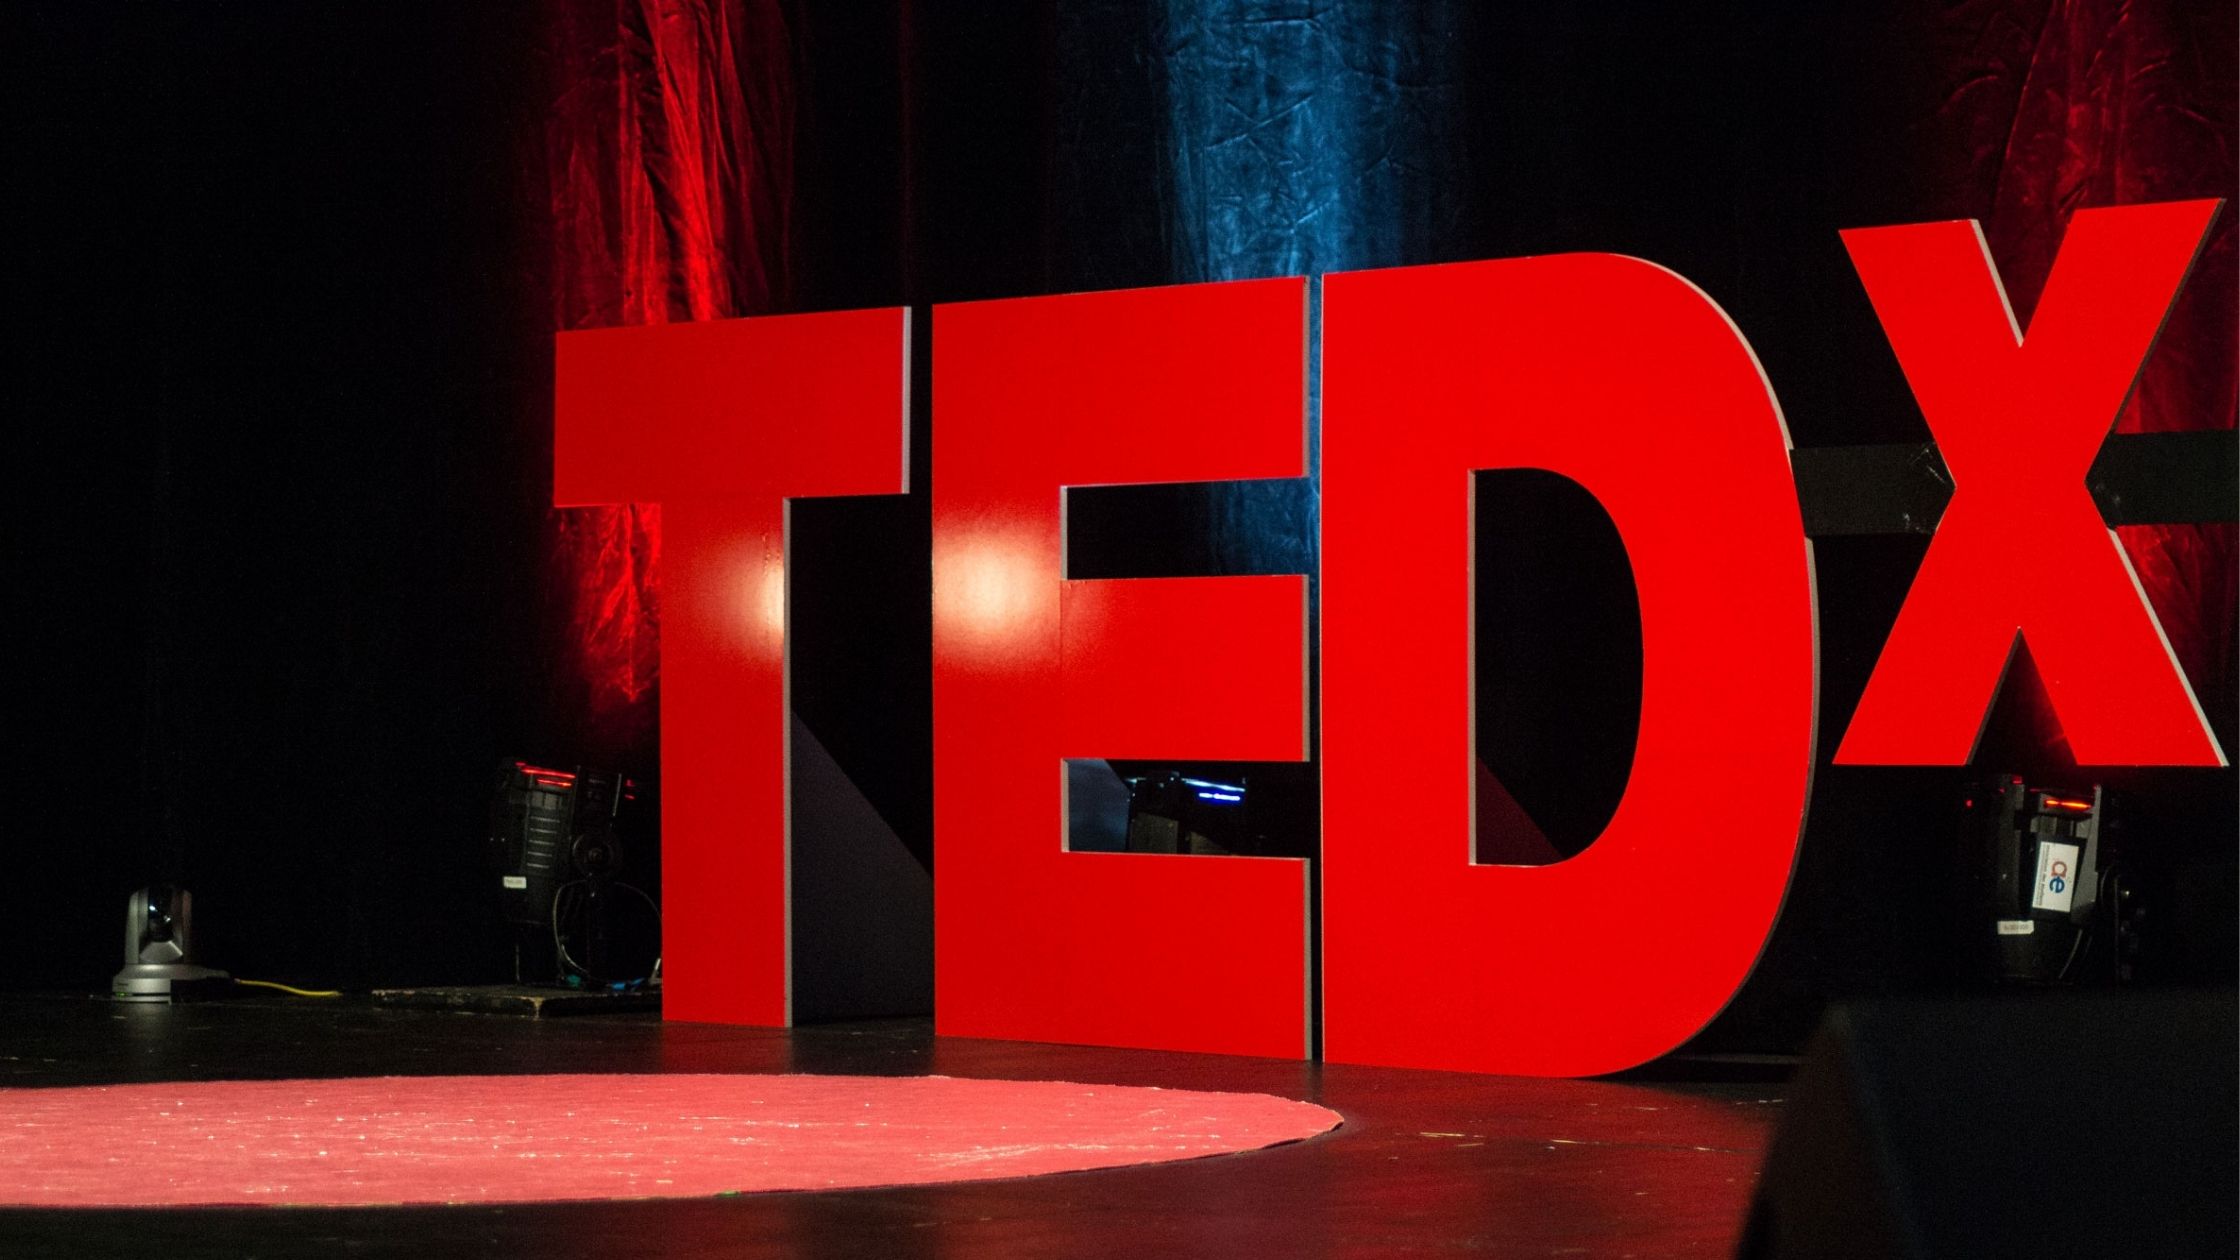 Speaking at TEDx